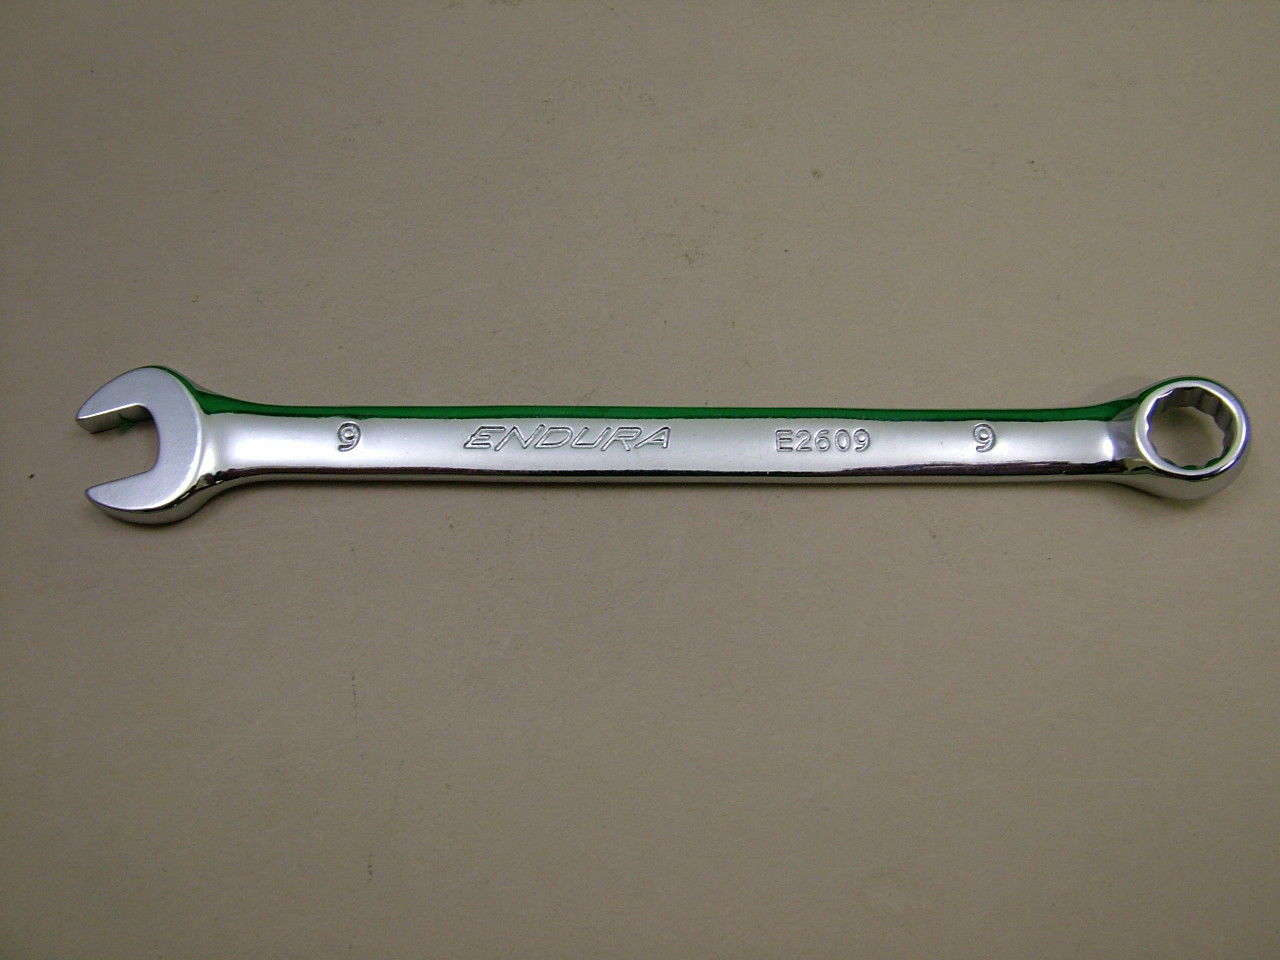 Combination spanner 9mm chrome vanadium steel, Endura brand, 9mm - Click Image to Close